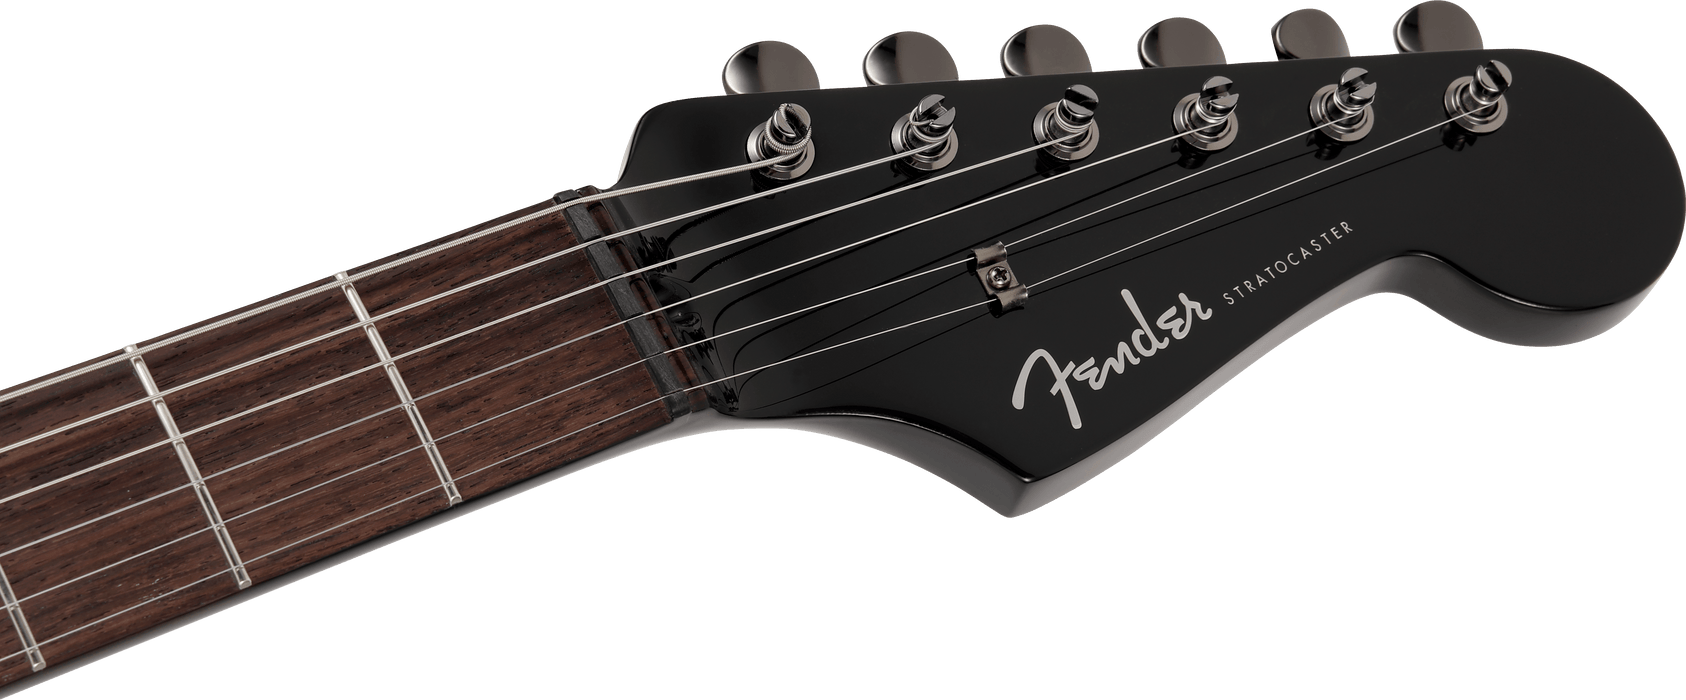 Fender Limited Edition Final Fantasy XIV Stratocaster PRE ORDER